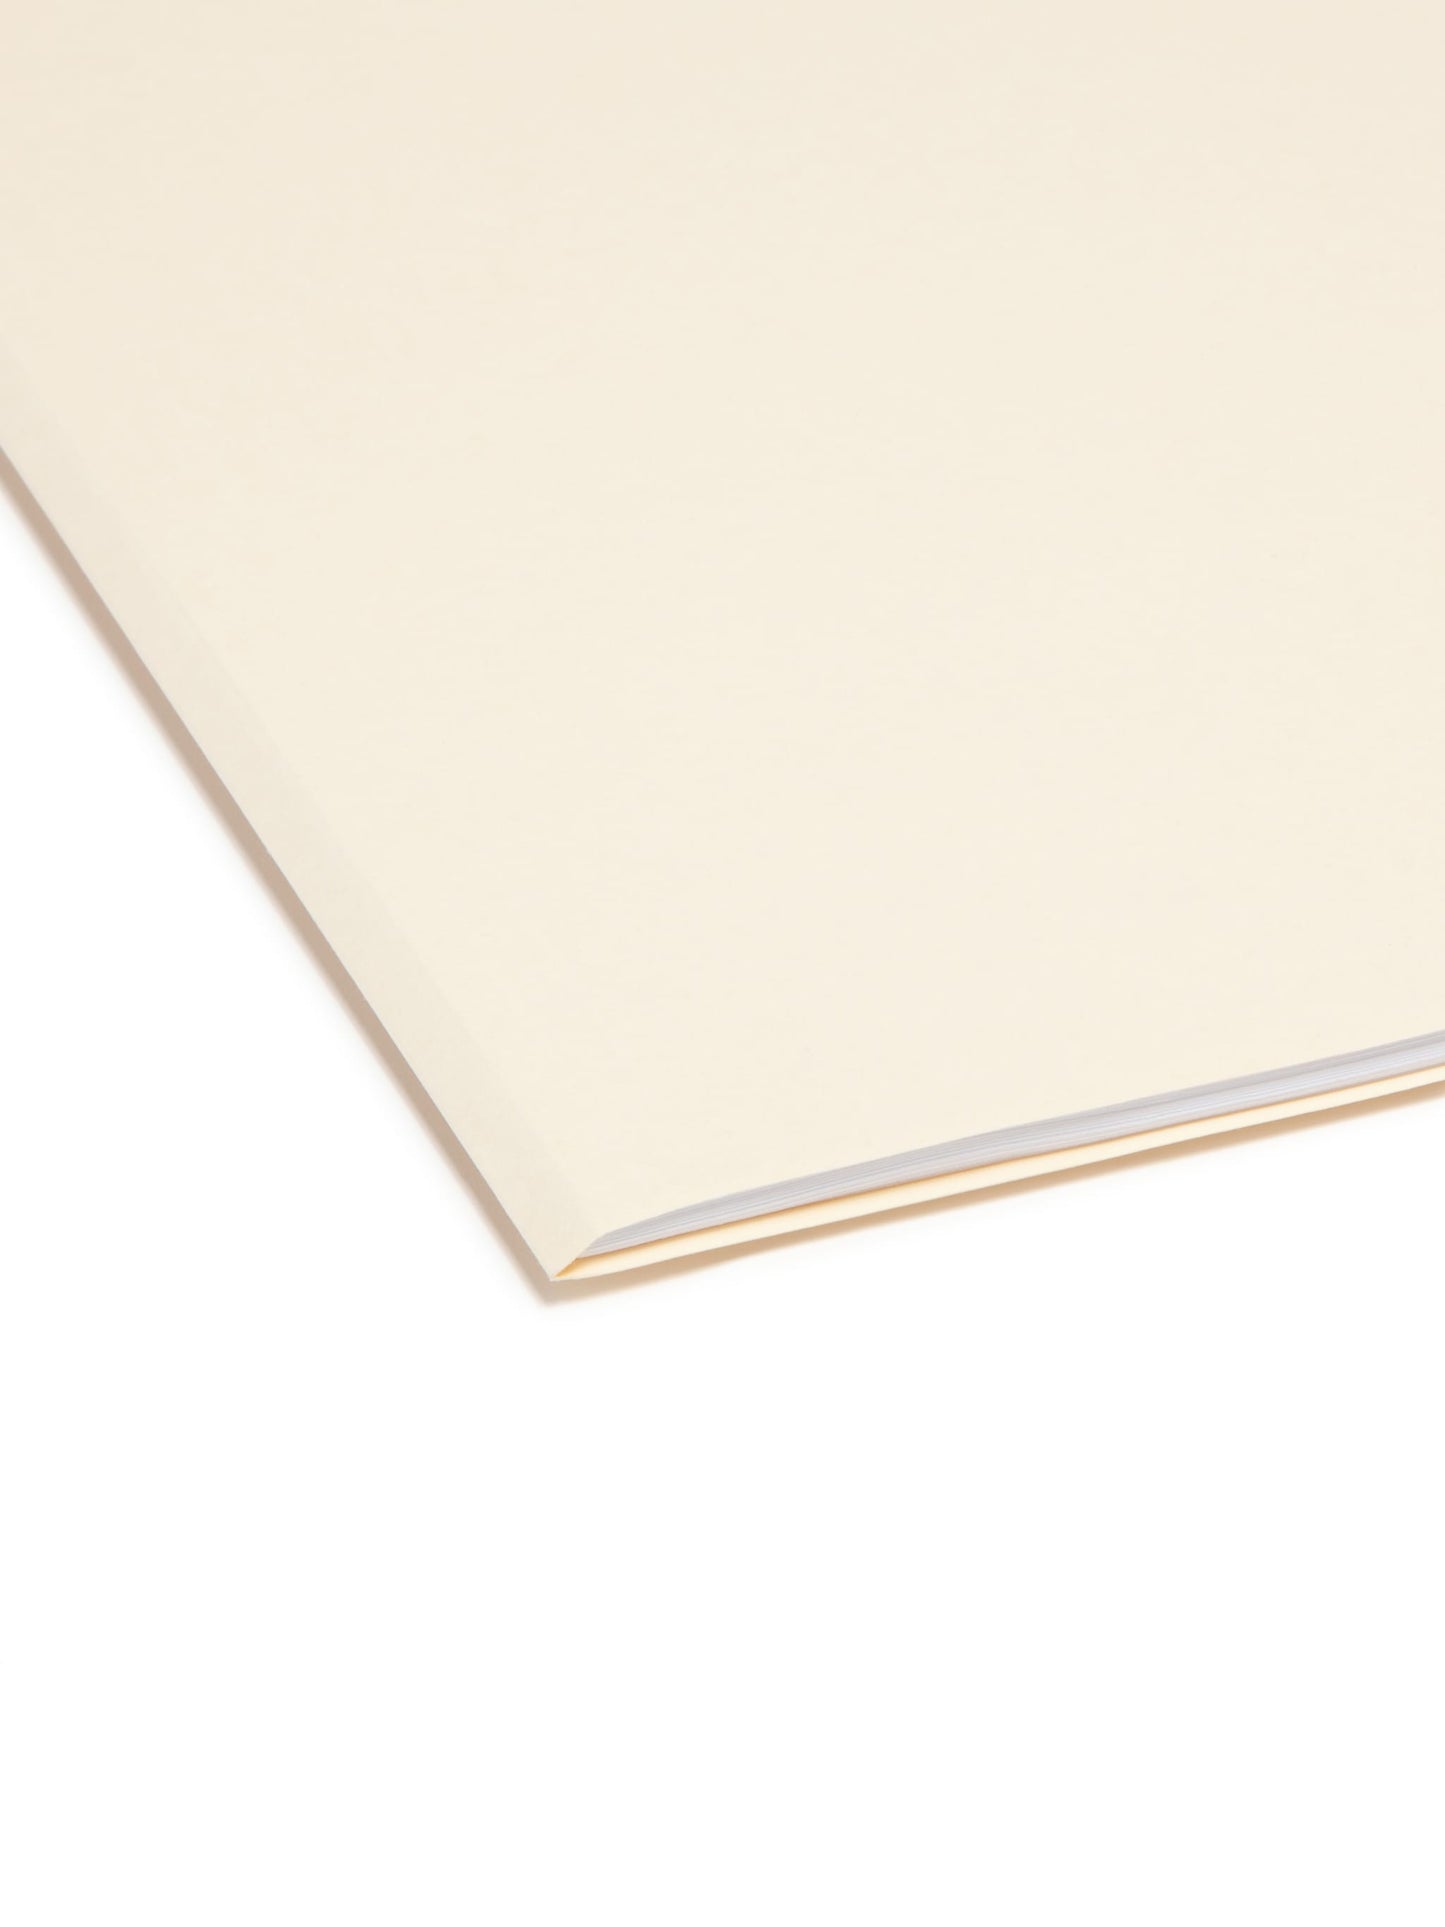 Heavyweight Reversible Printed Tab File Folders, 1/2-Cut Tab, Manila Color, Legal Size, 086486154451